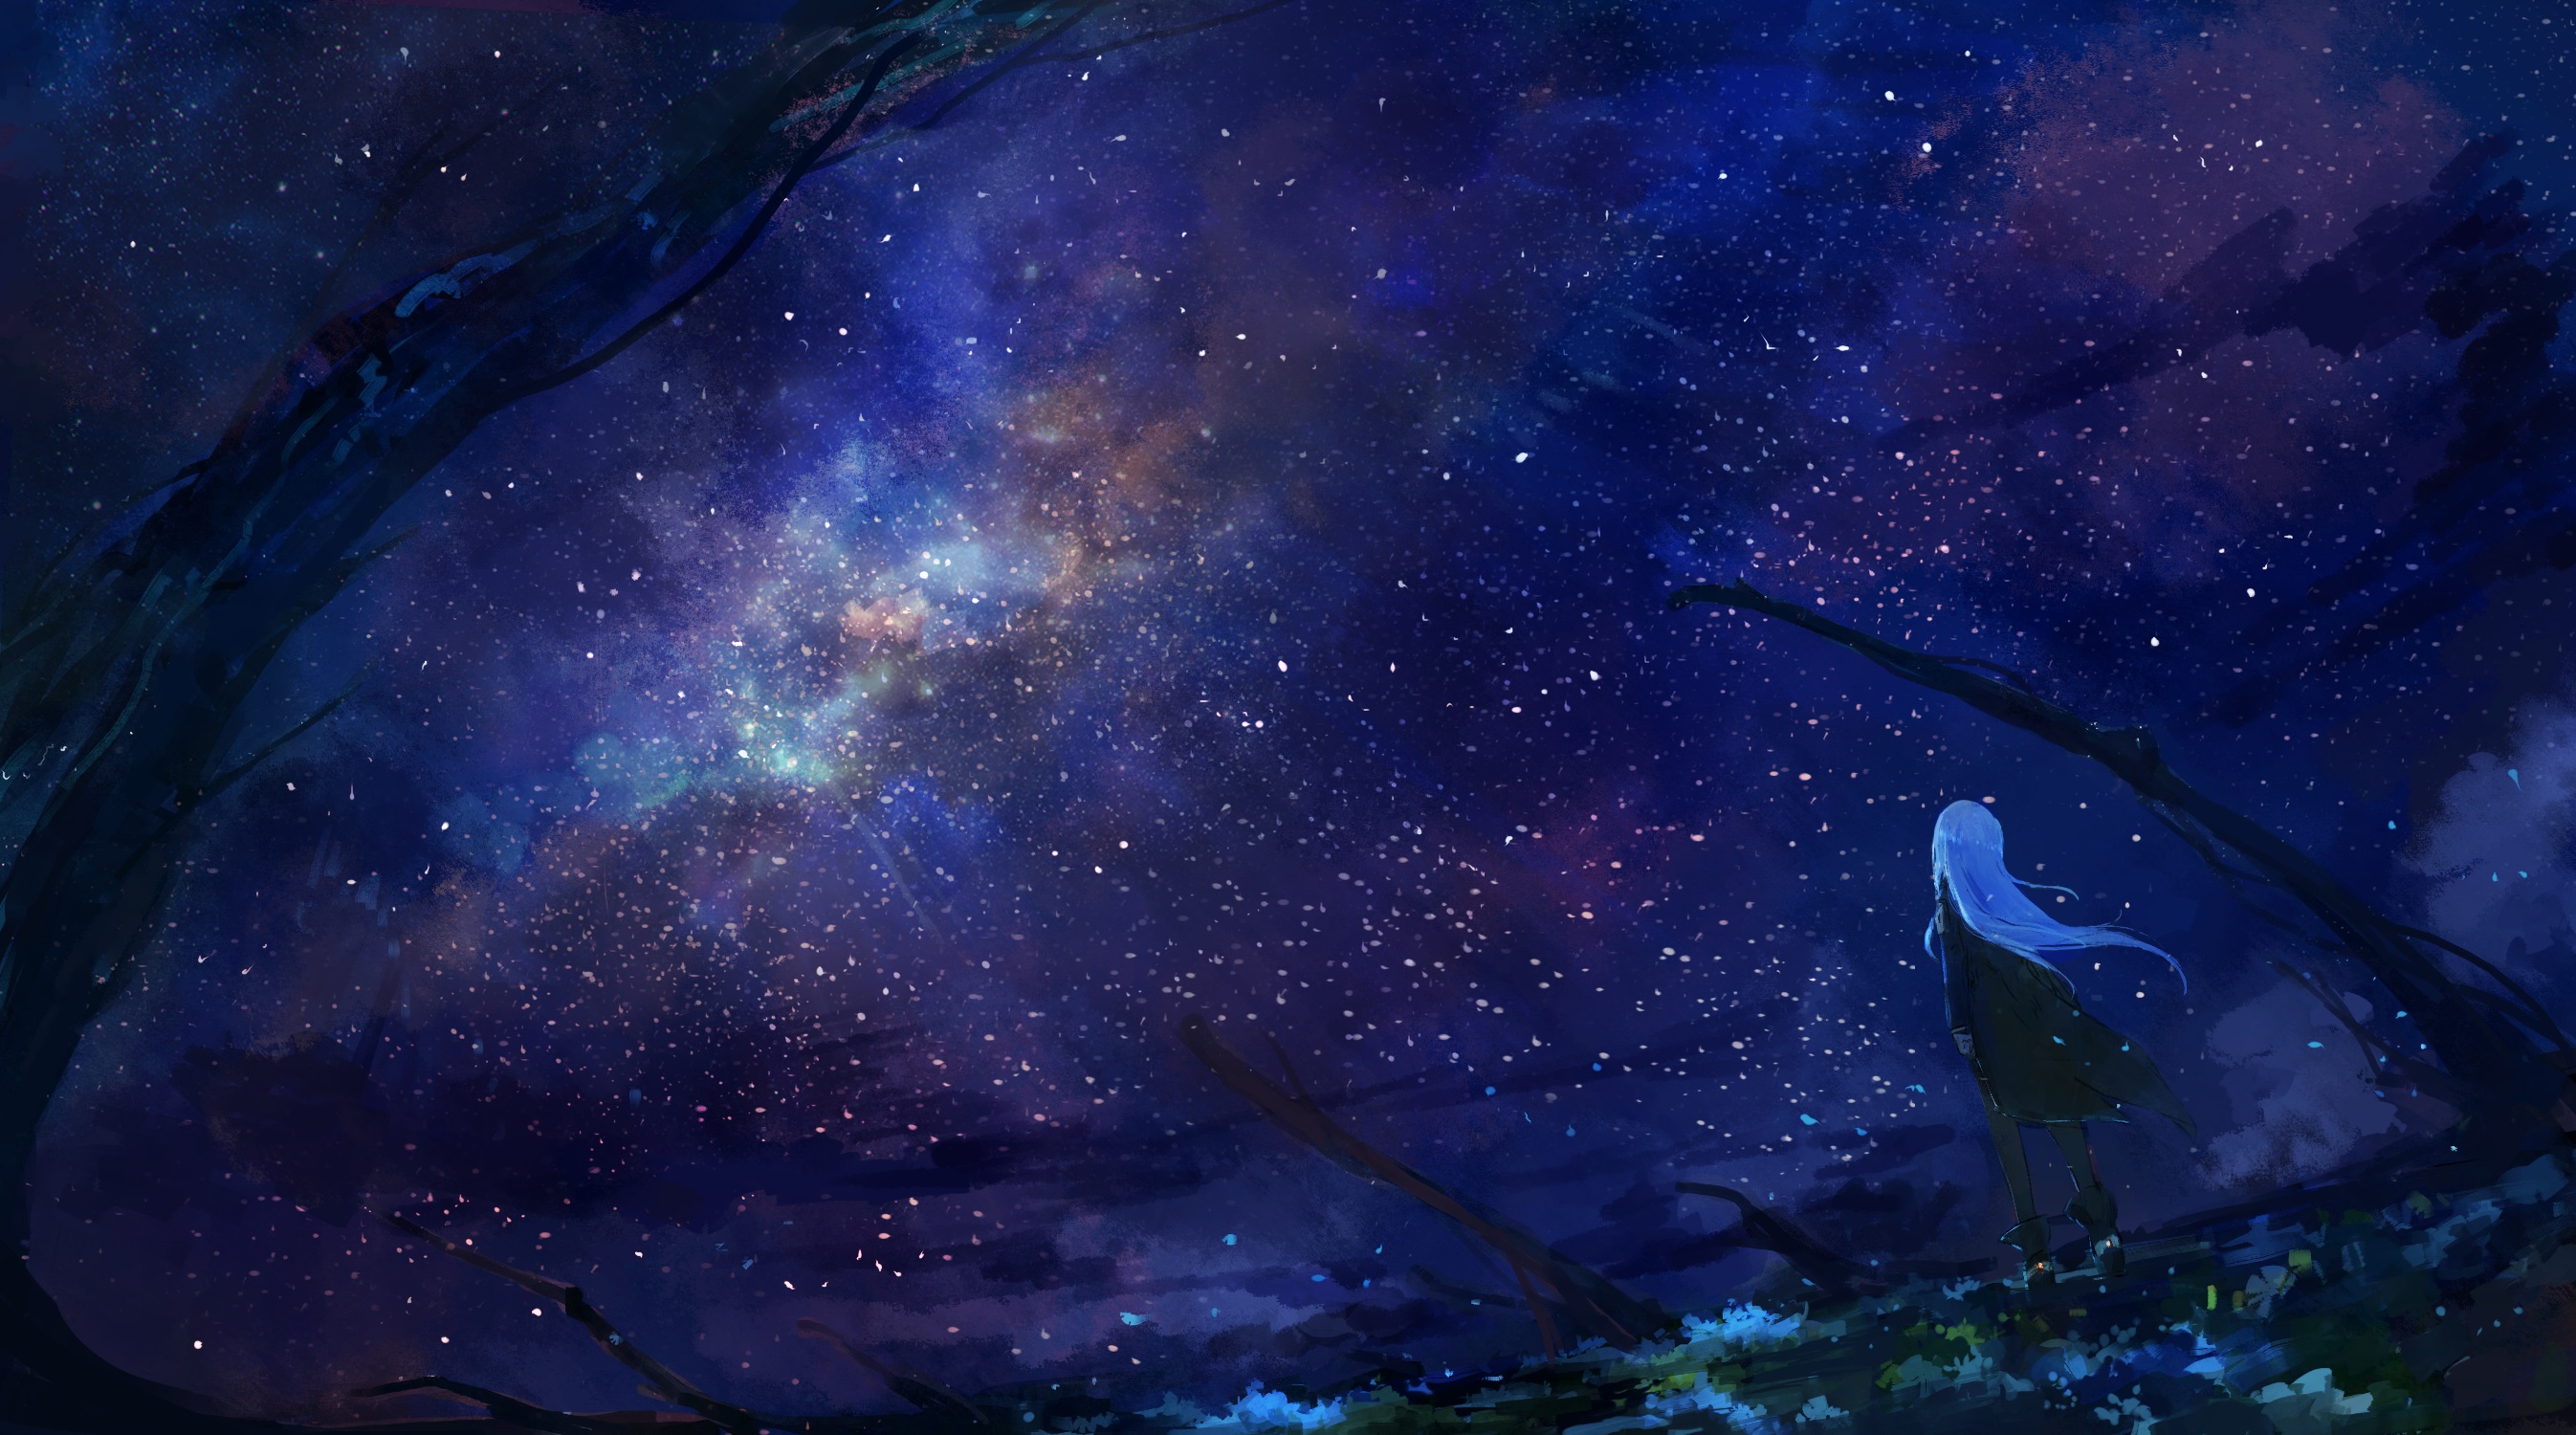 Anime Night Sky Images - Free Download on Freepik